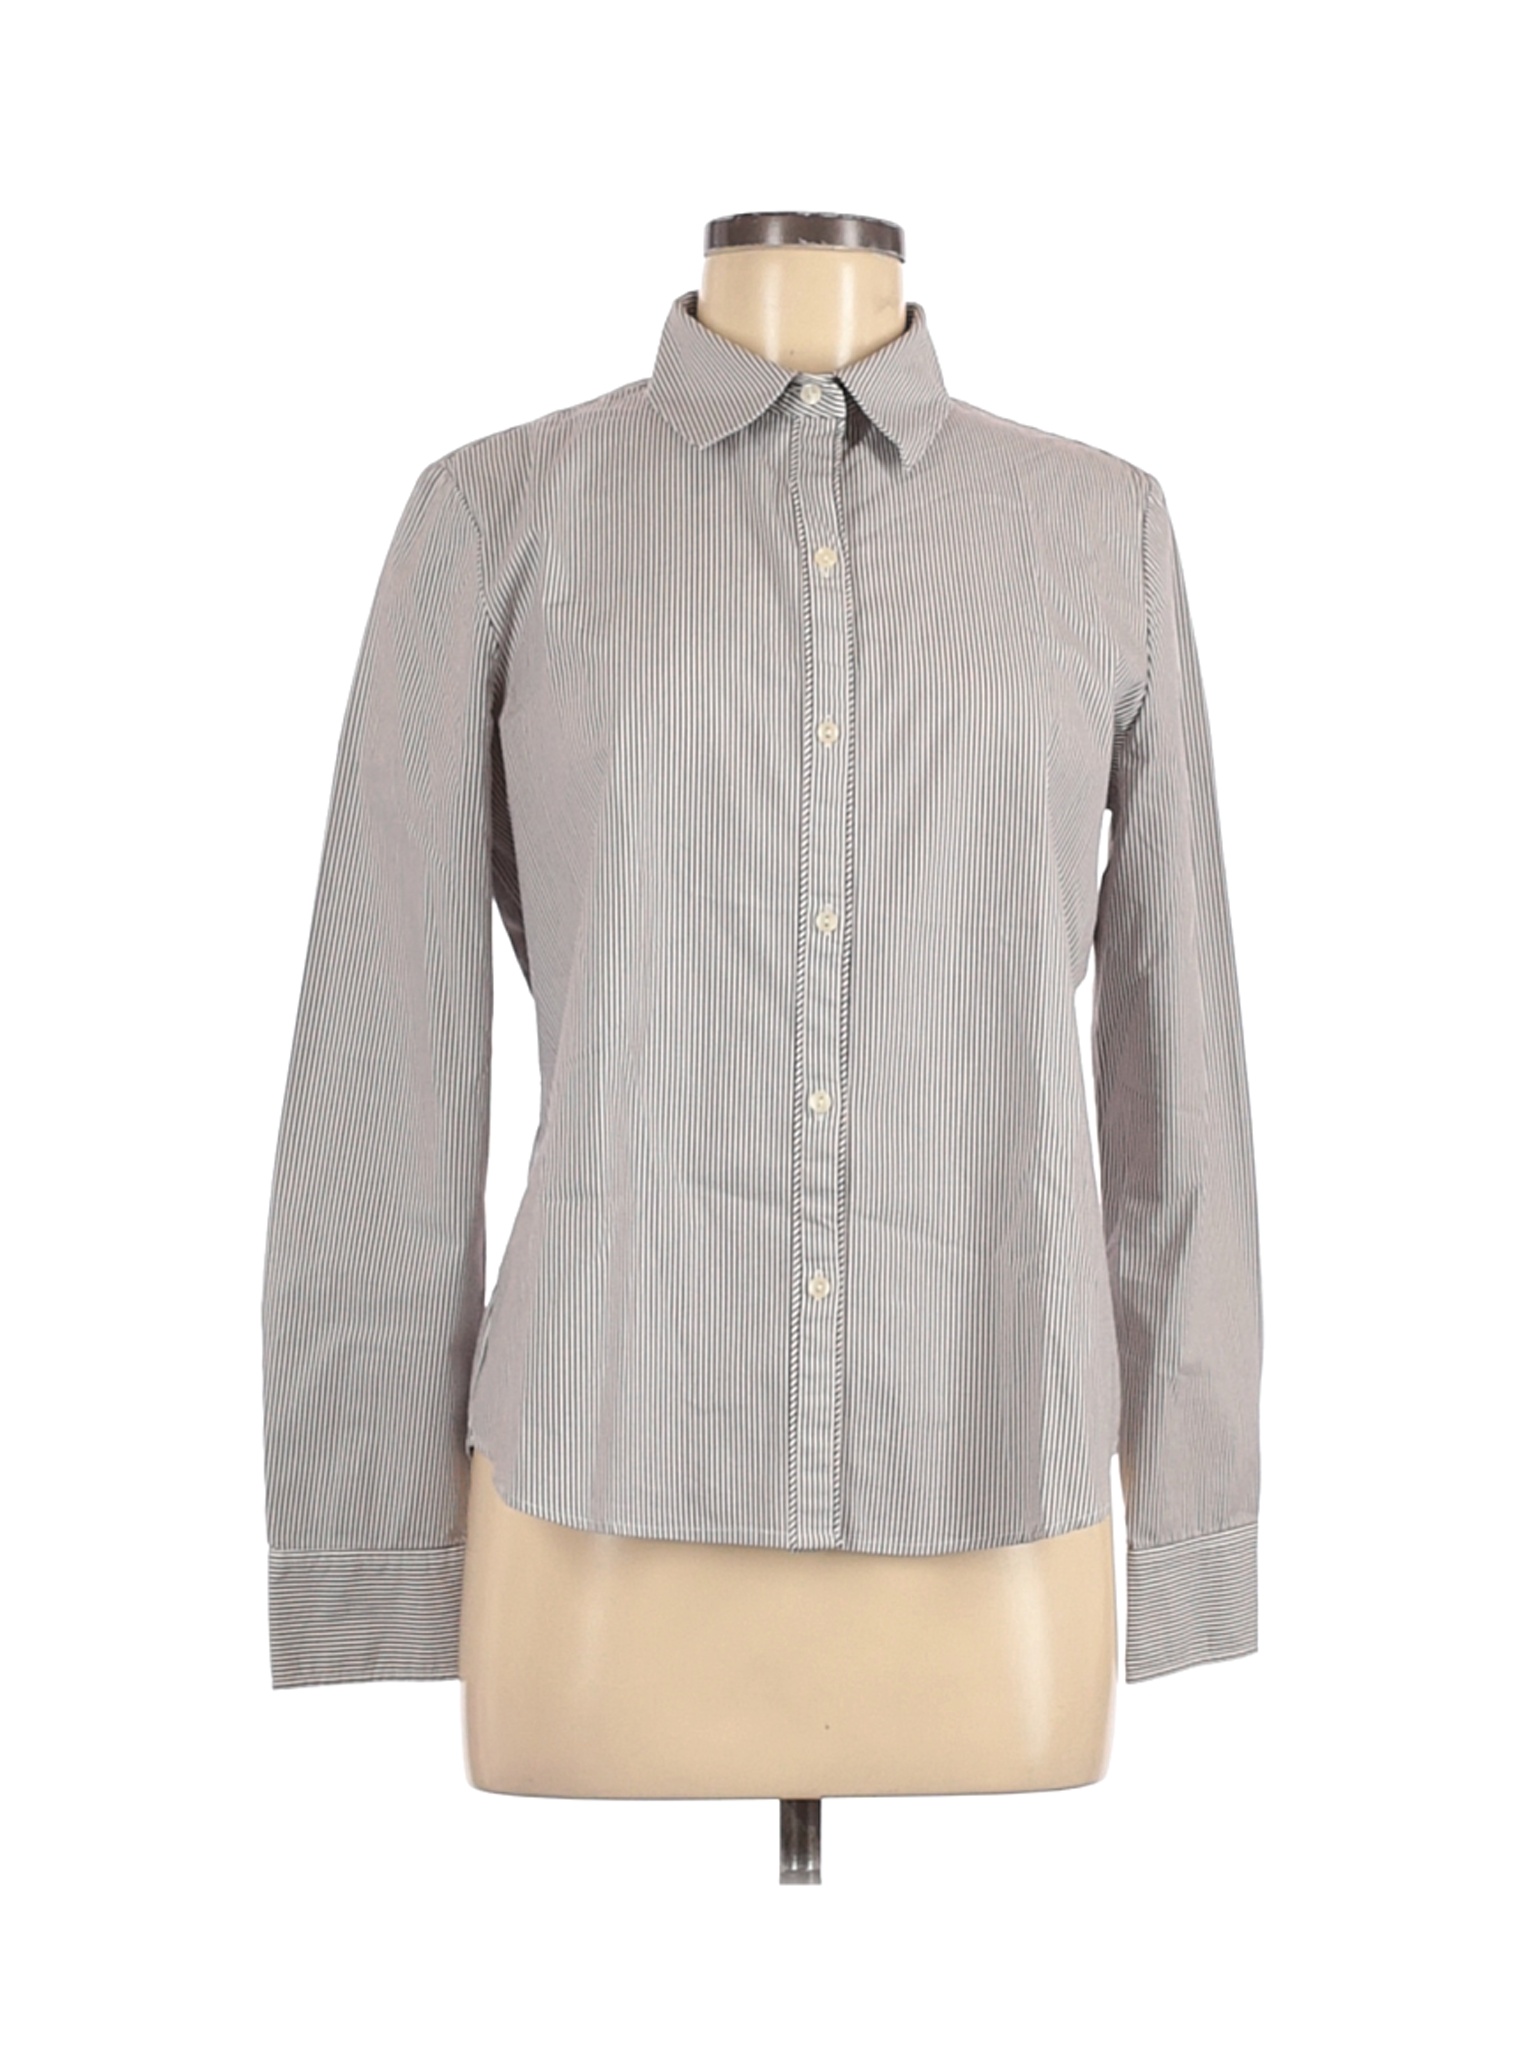 Liz Claiborne Women Gray Long Sleeve Button-Down Shirt M | eBay